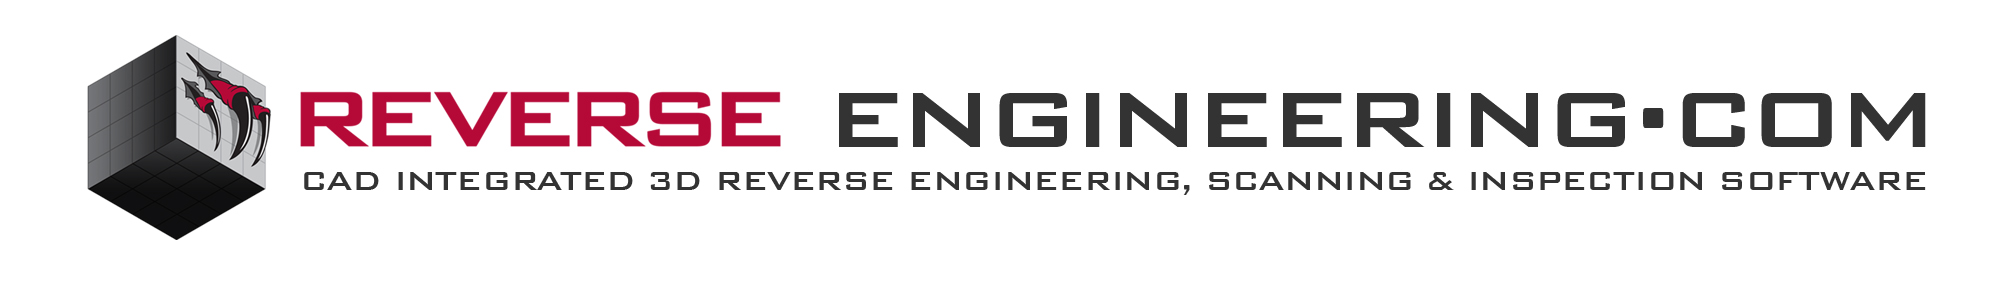 REVERSE ENGINEERING.COM, Logo